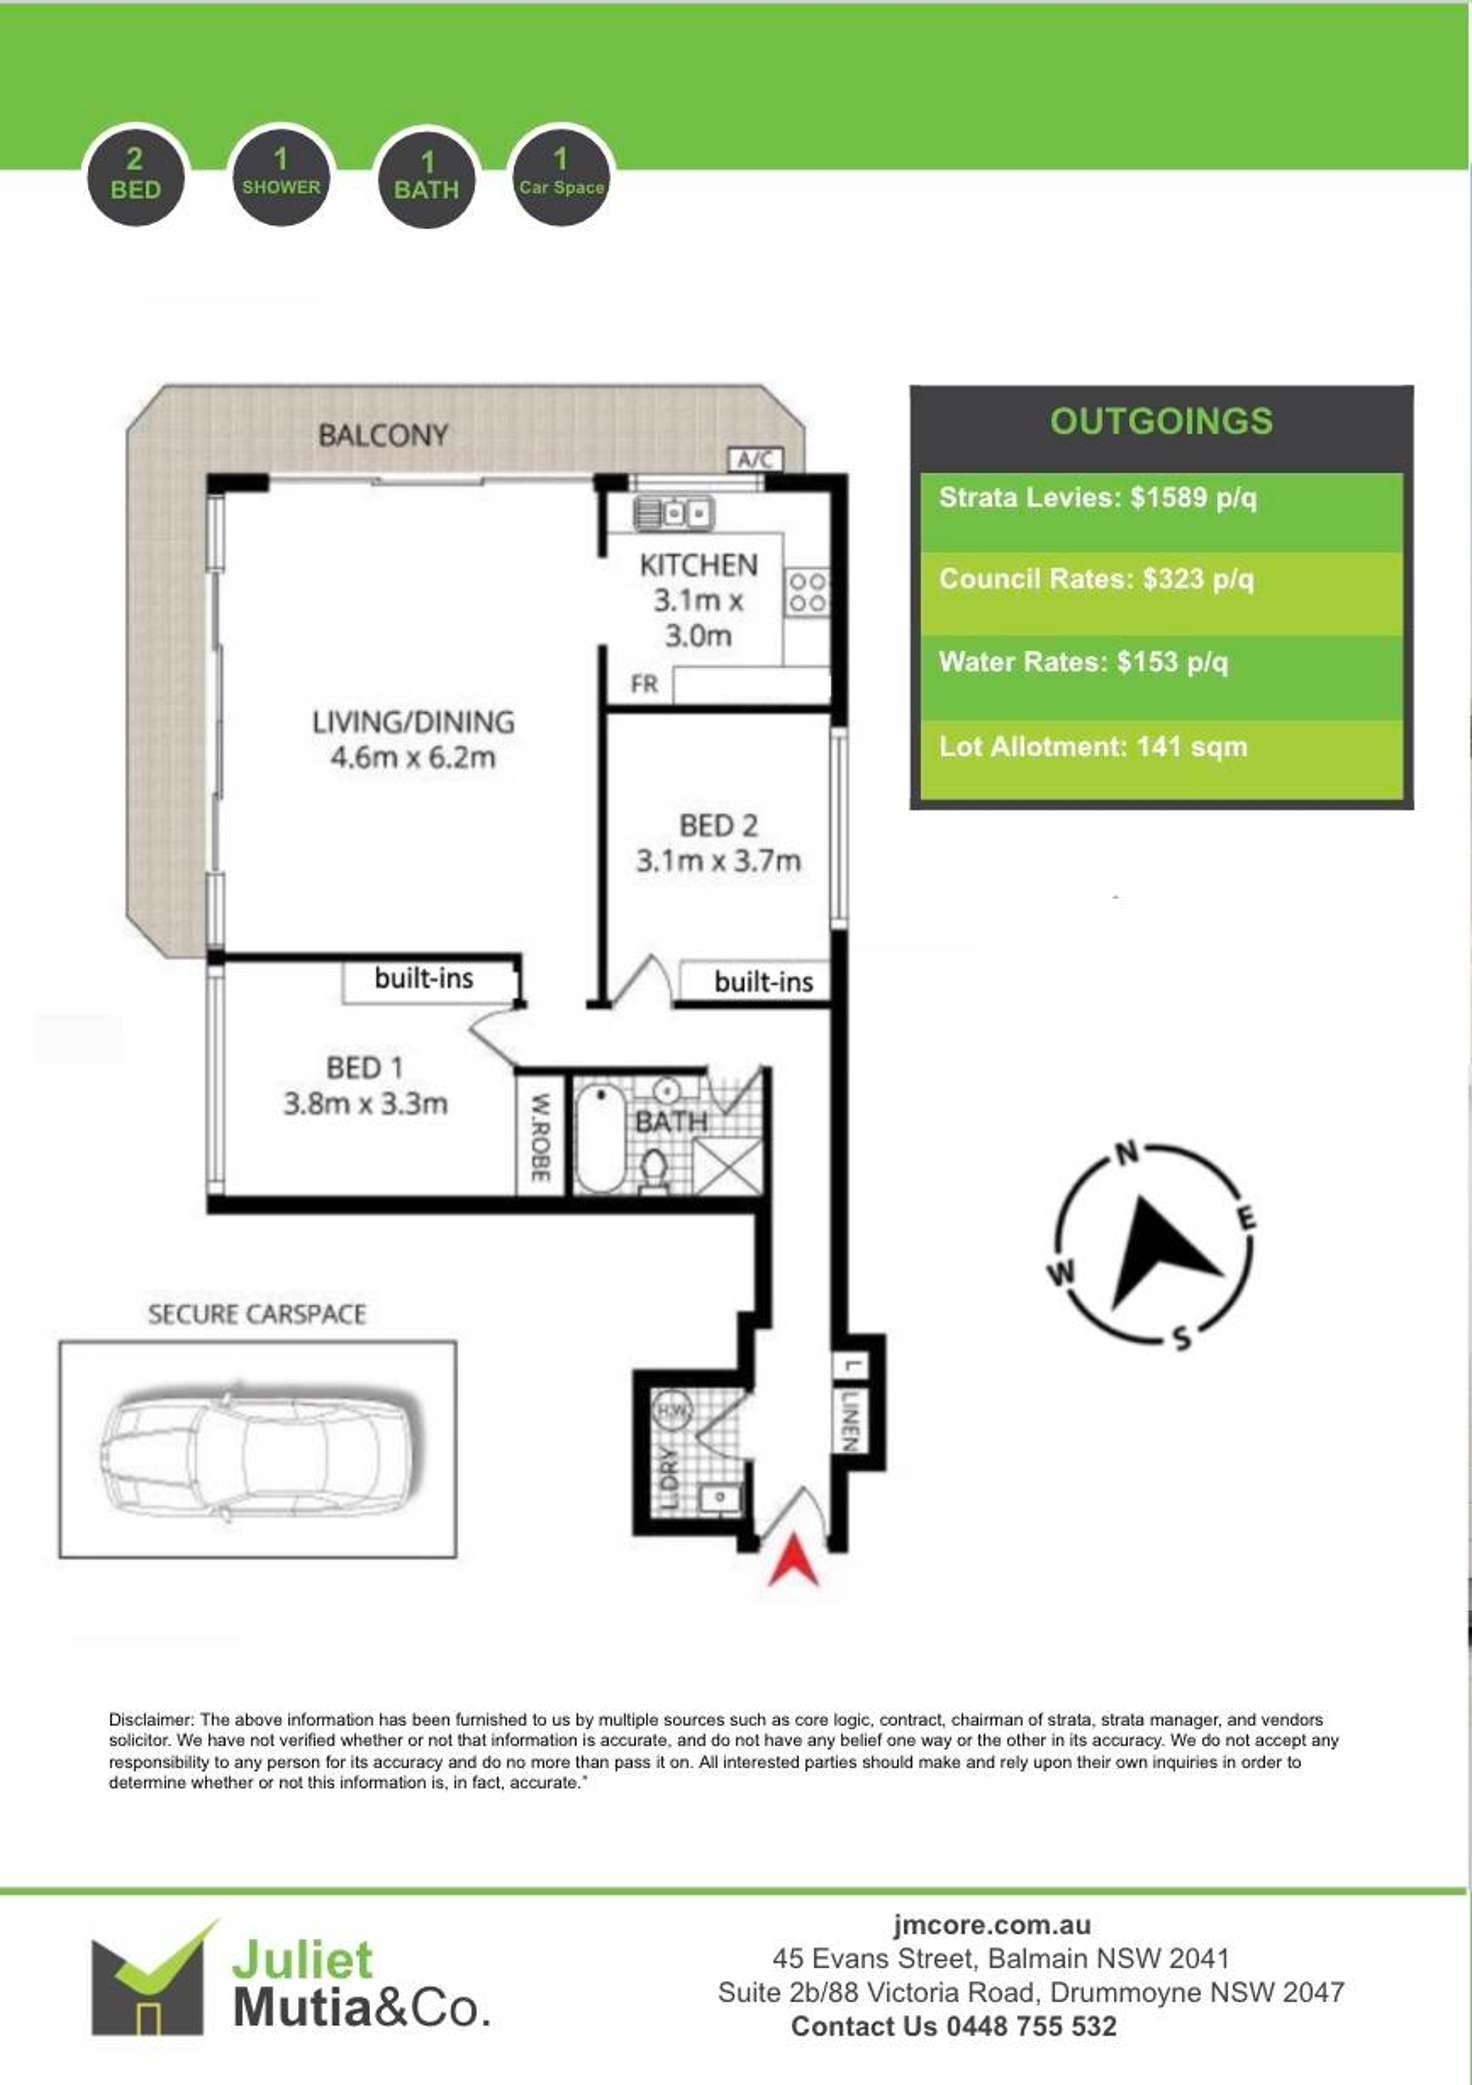 Floorplan of Homely unit listing, 7D/30 Churchill Avenue, Strathfield NSW 2135